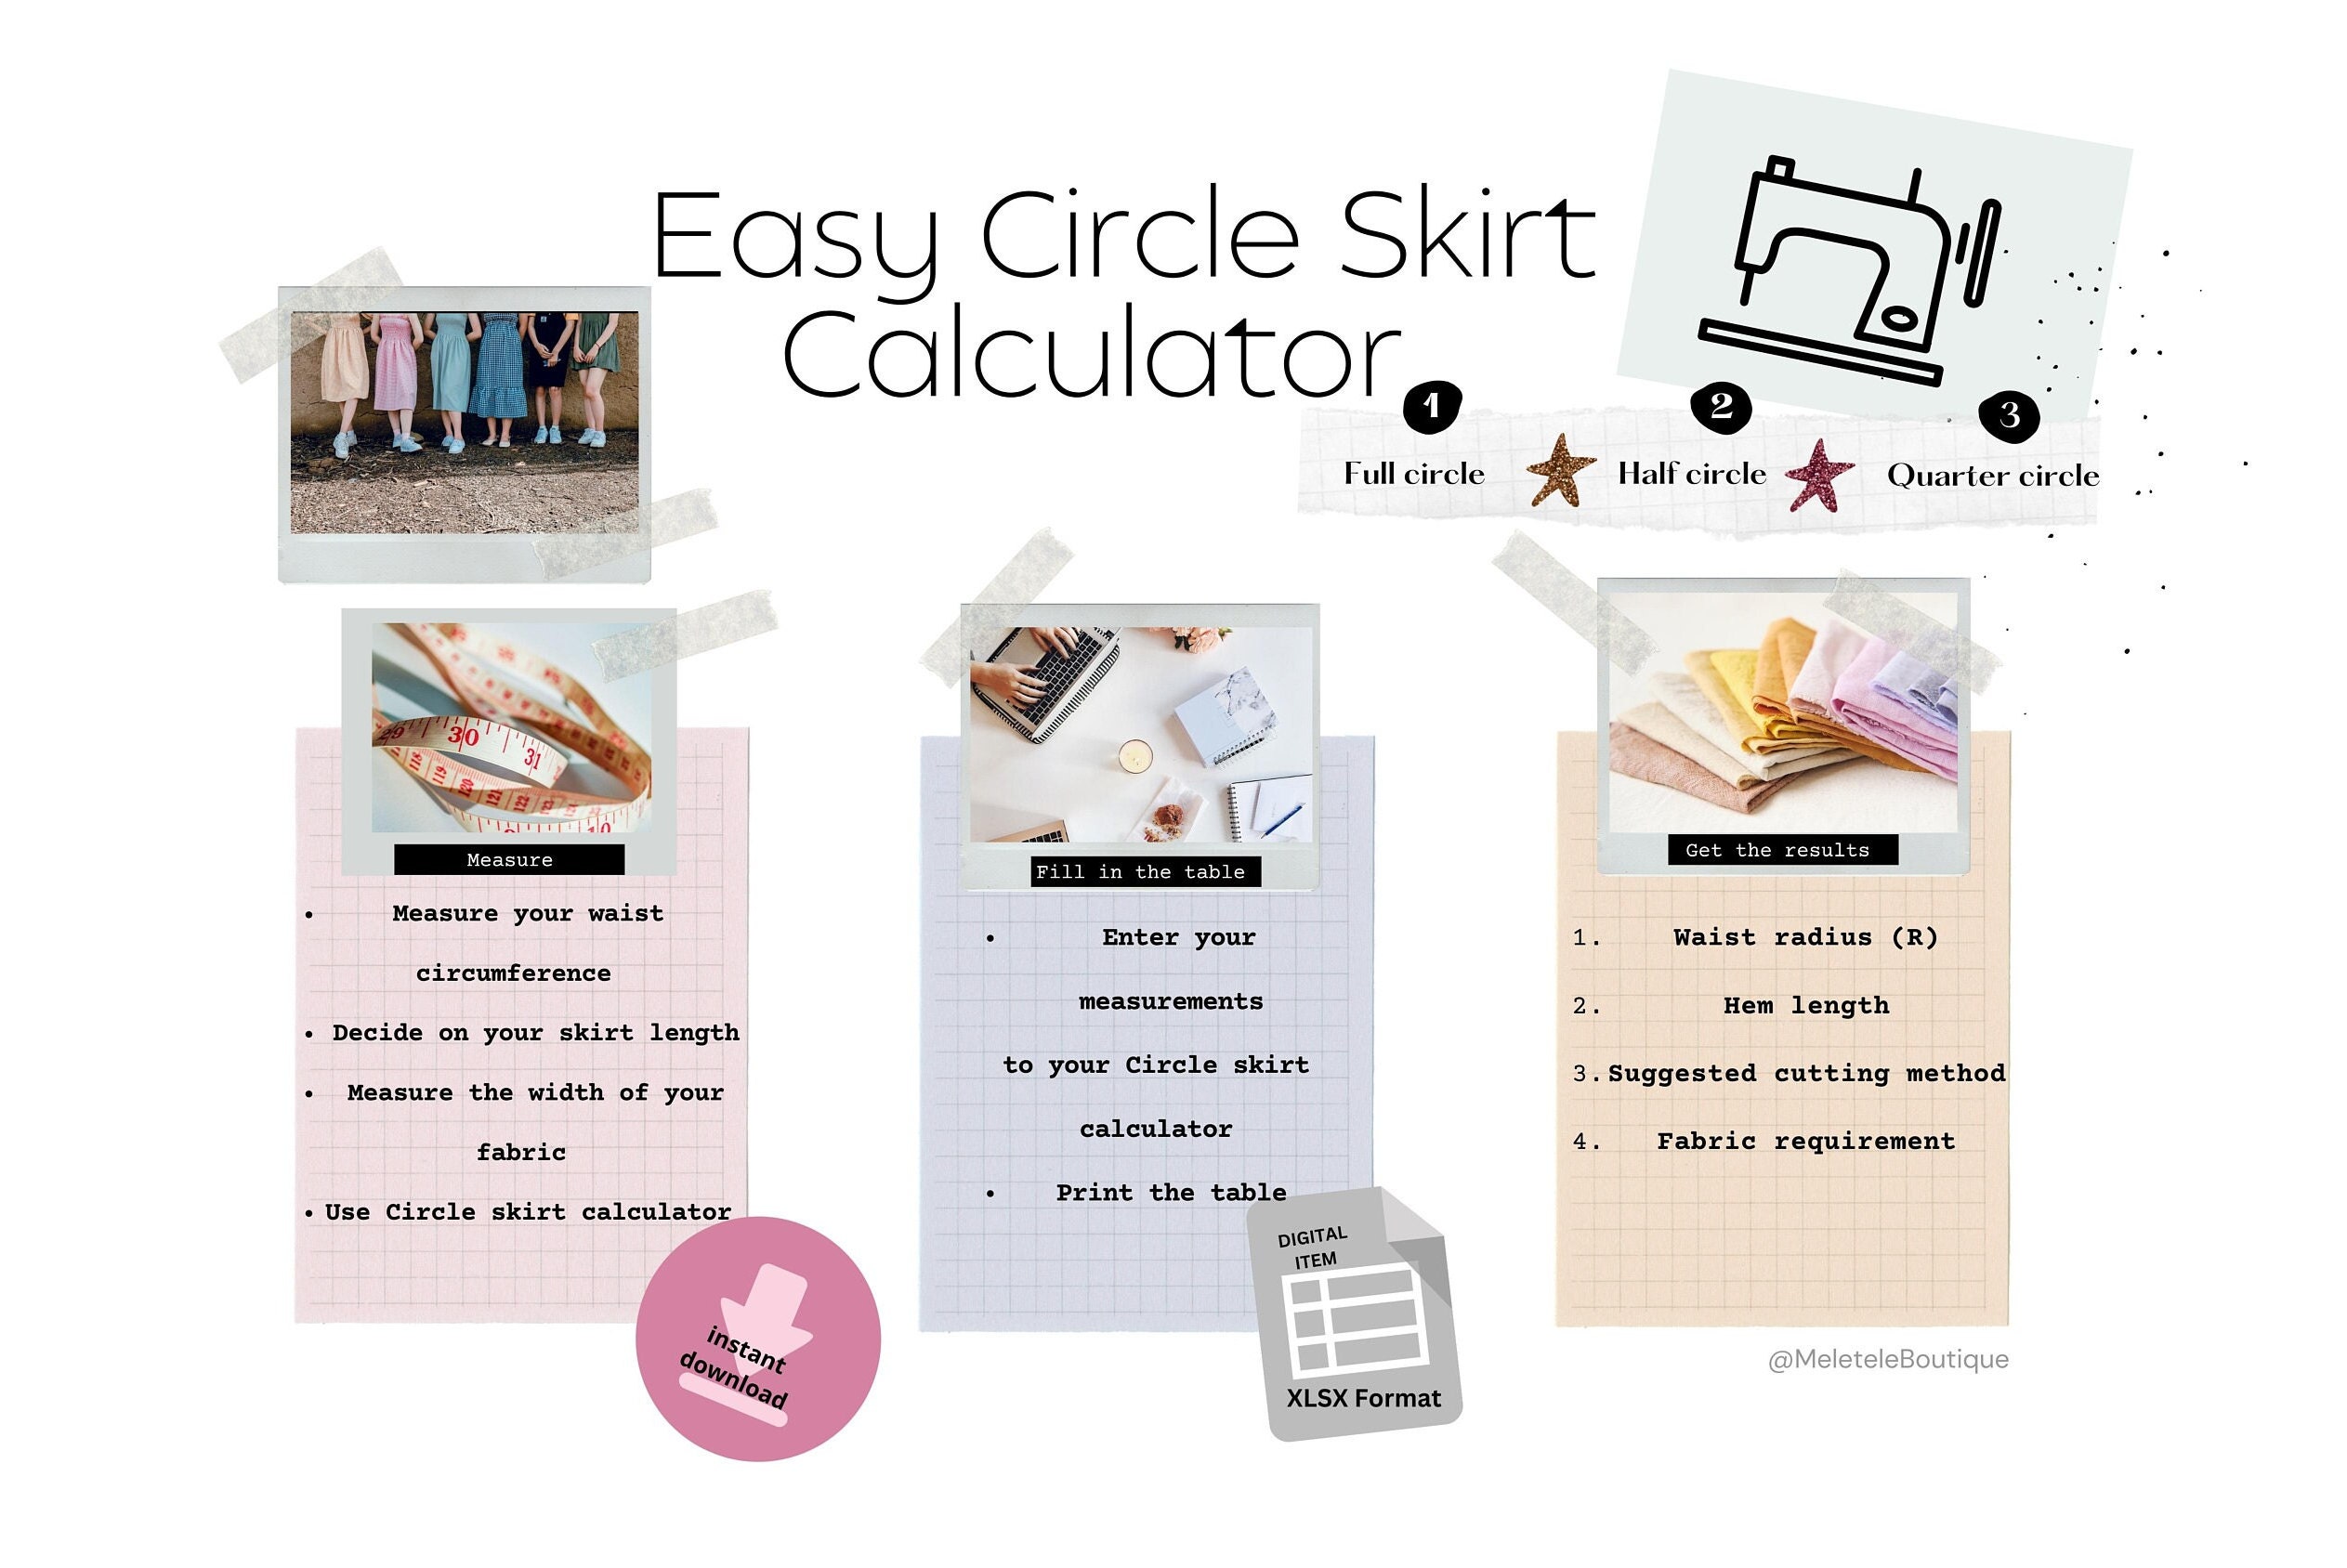 Circle Skirts: Inspiration & Resources